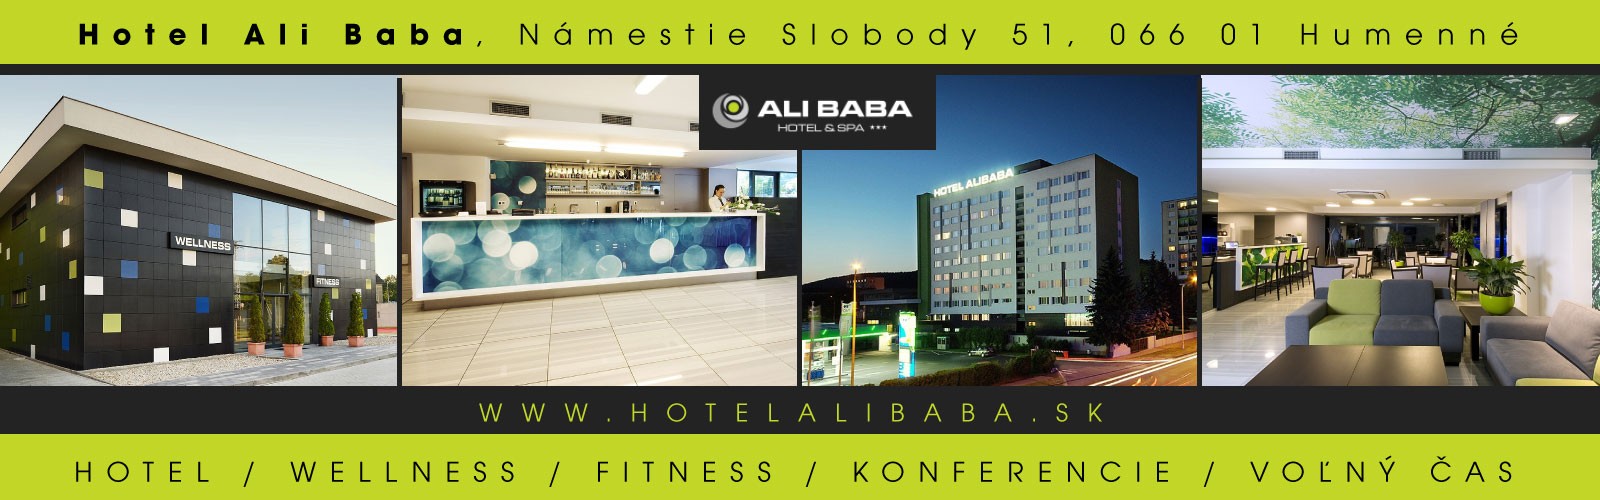 Hotel alibaba